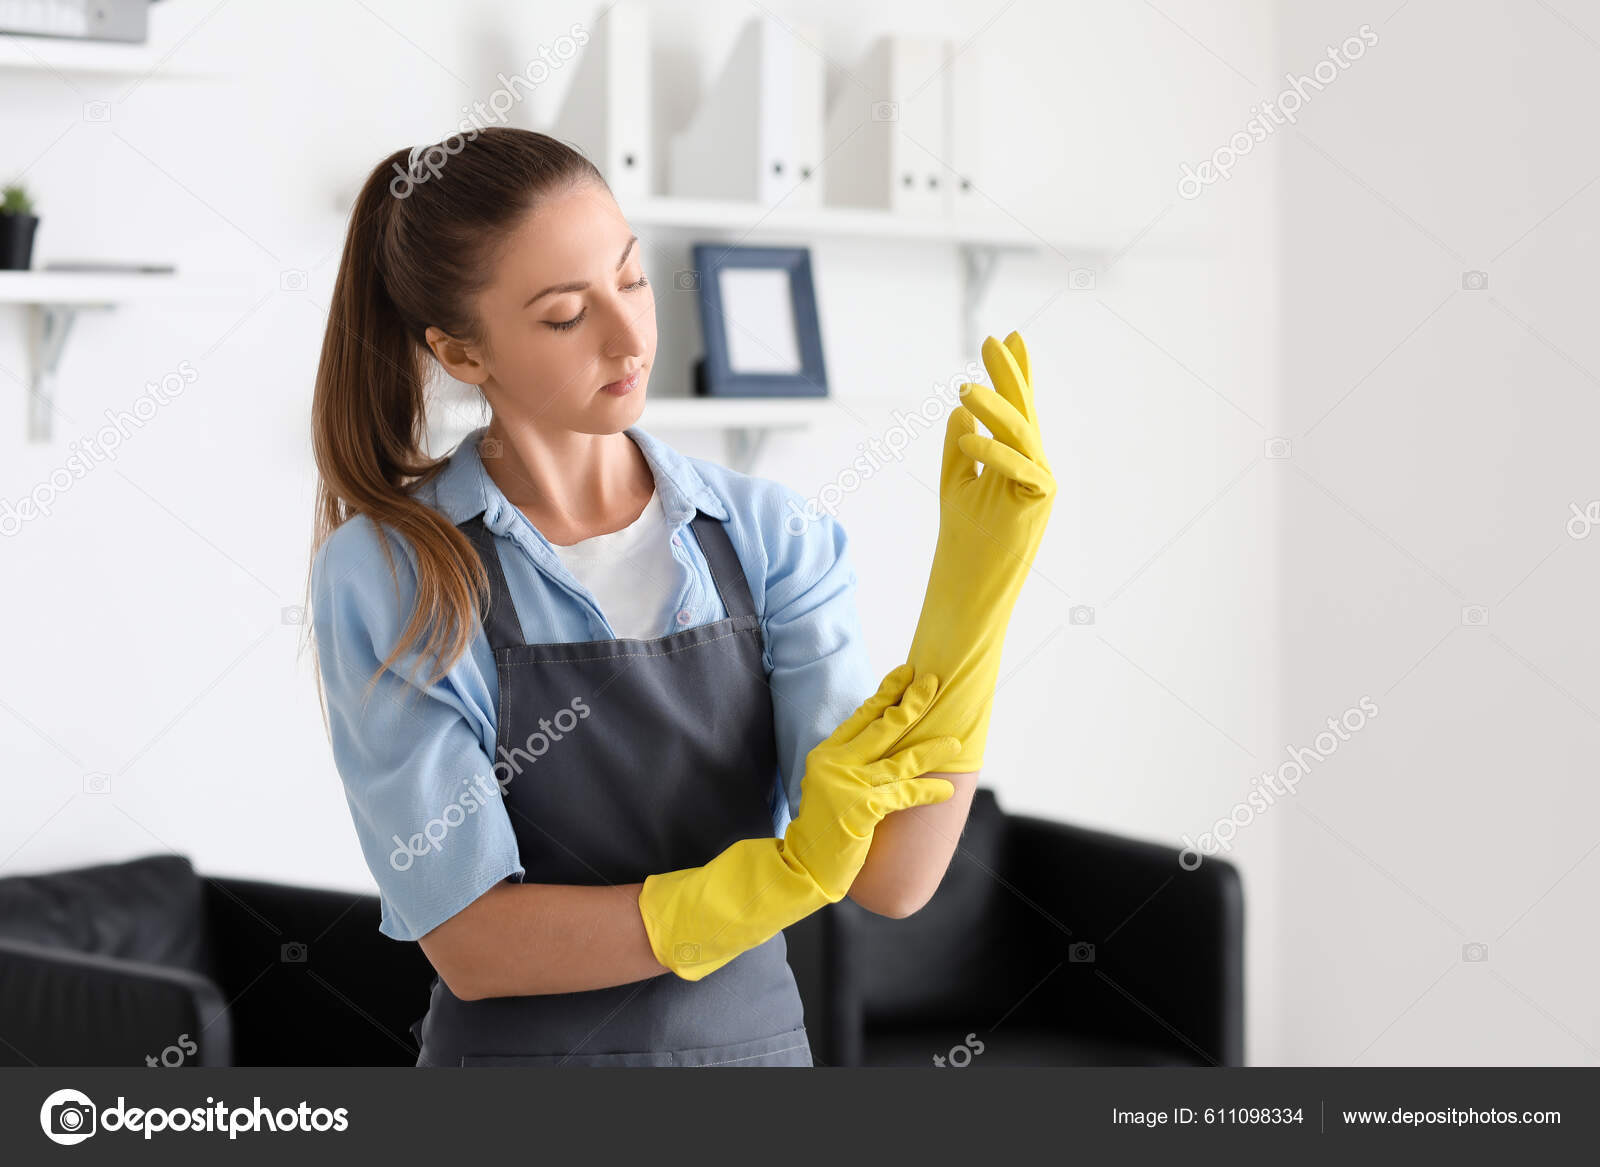 https://st.depositphotos.com/10614052/61109/i/1600/depositphotos_611098334-stock-photo-female-worker-cleaning-service-rubber.jpg